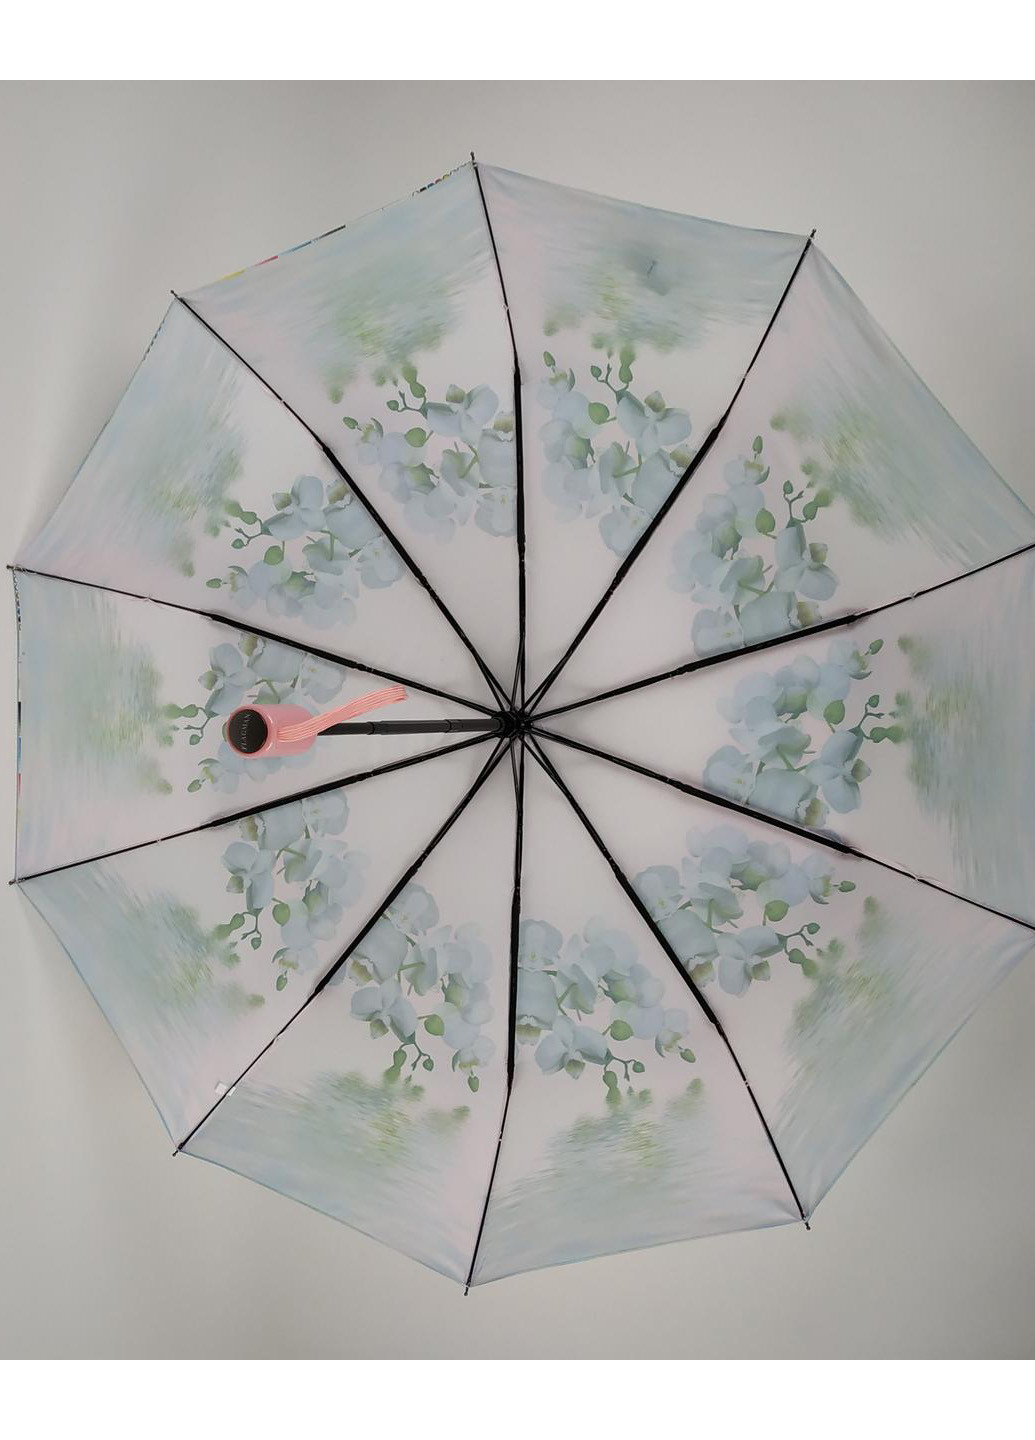 Жіночий автоматичний парасольку (734) 98 см Flagman (189979095)